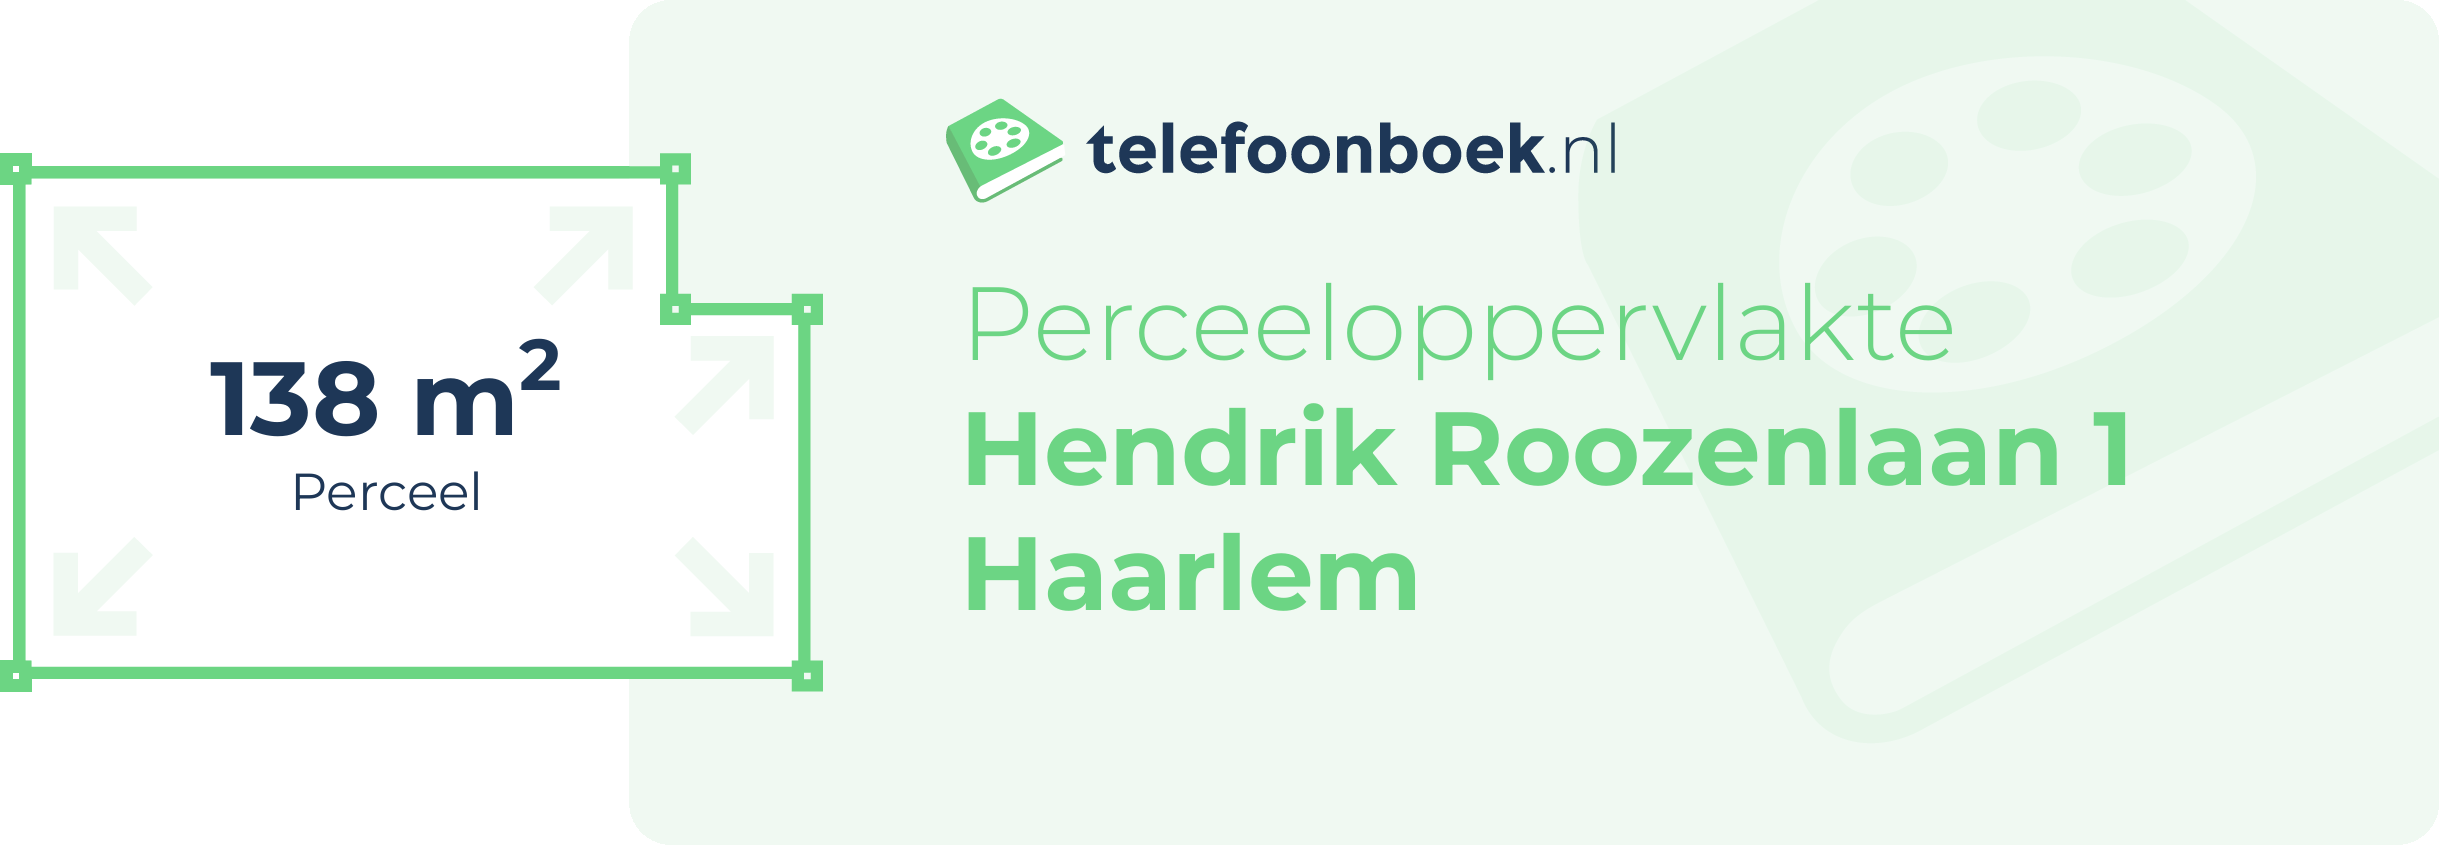 Perceeloppervlakte Hendrik Roozenlaan 1 Haarlem